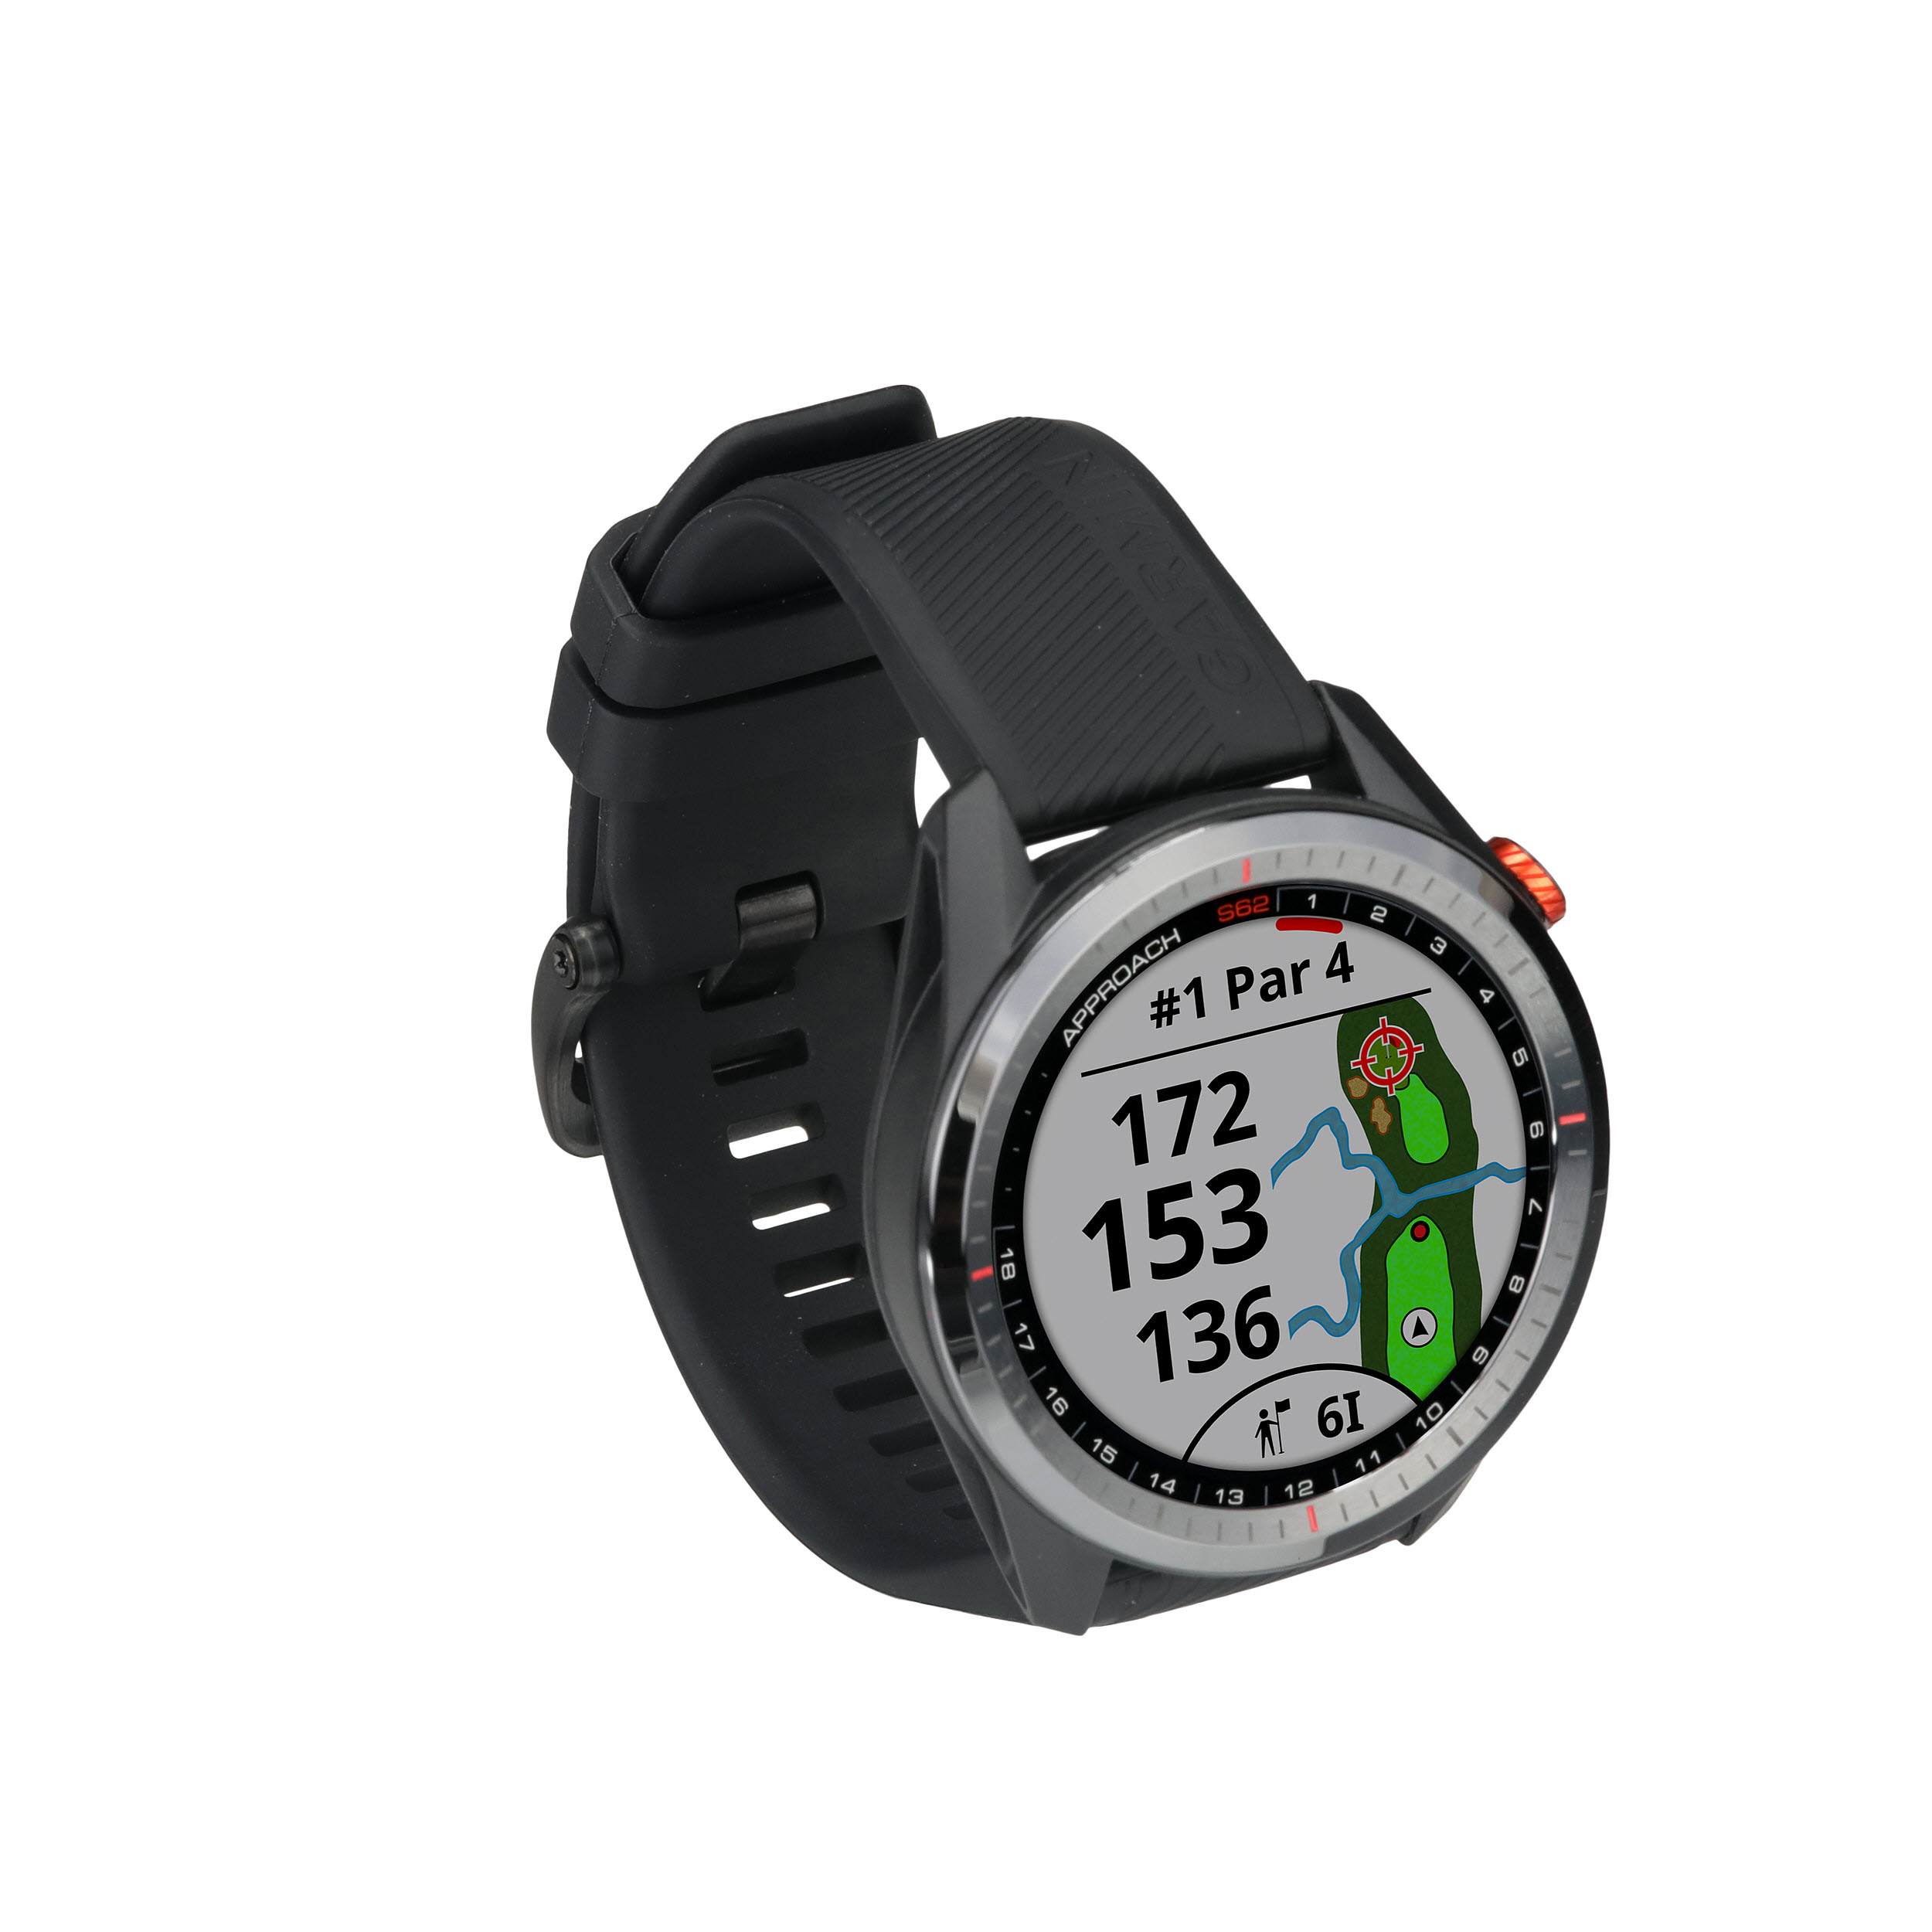 Garmin Approach S62 Premium GPS Golf Watch, Black - Walmart.com